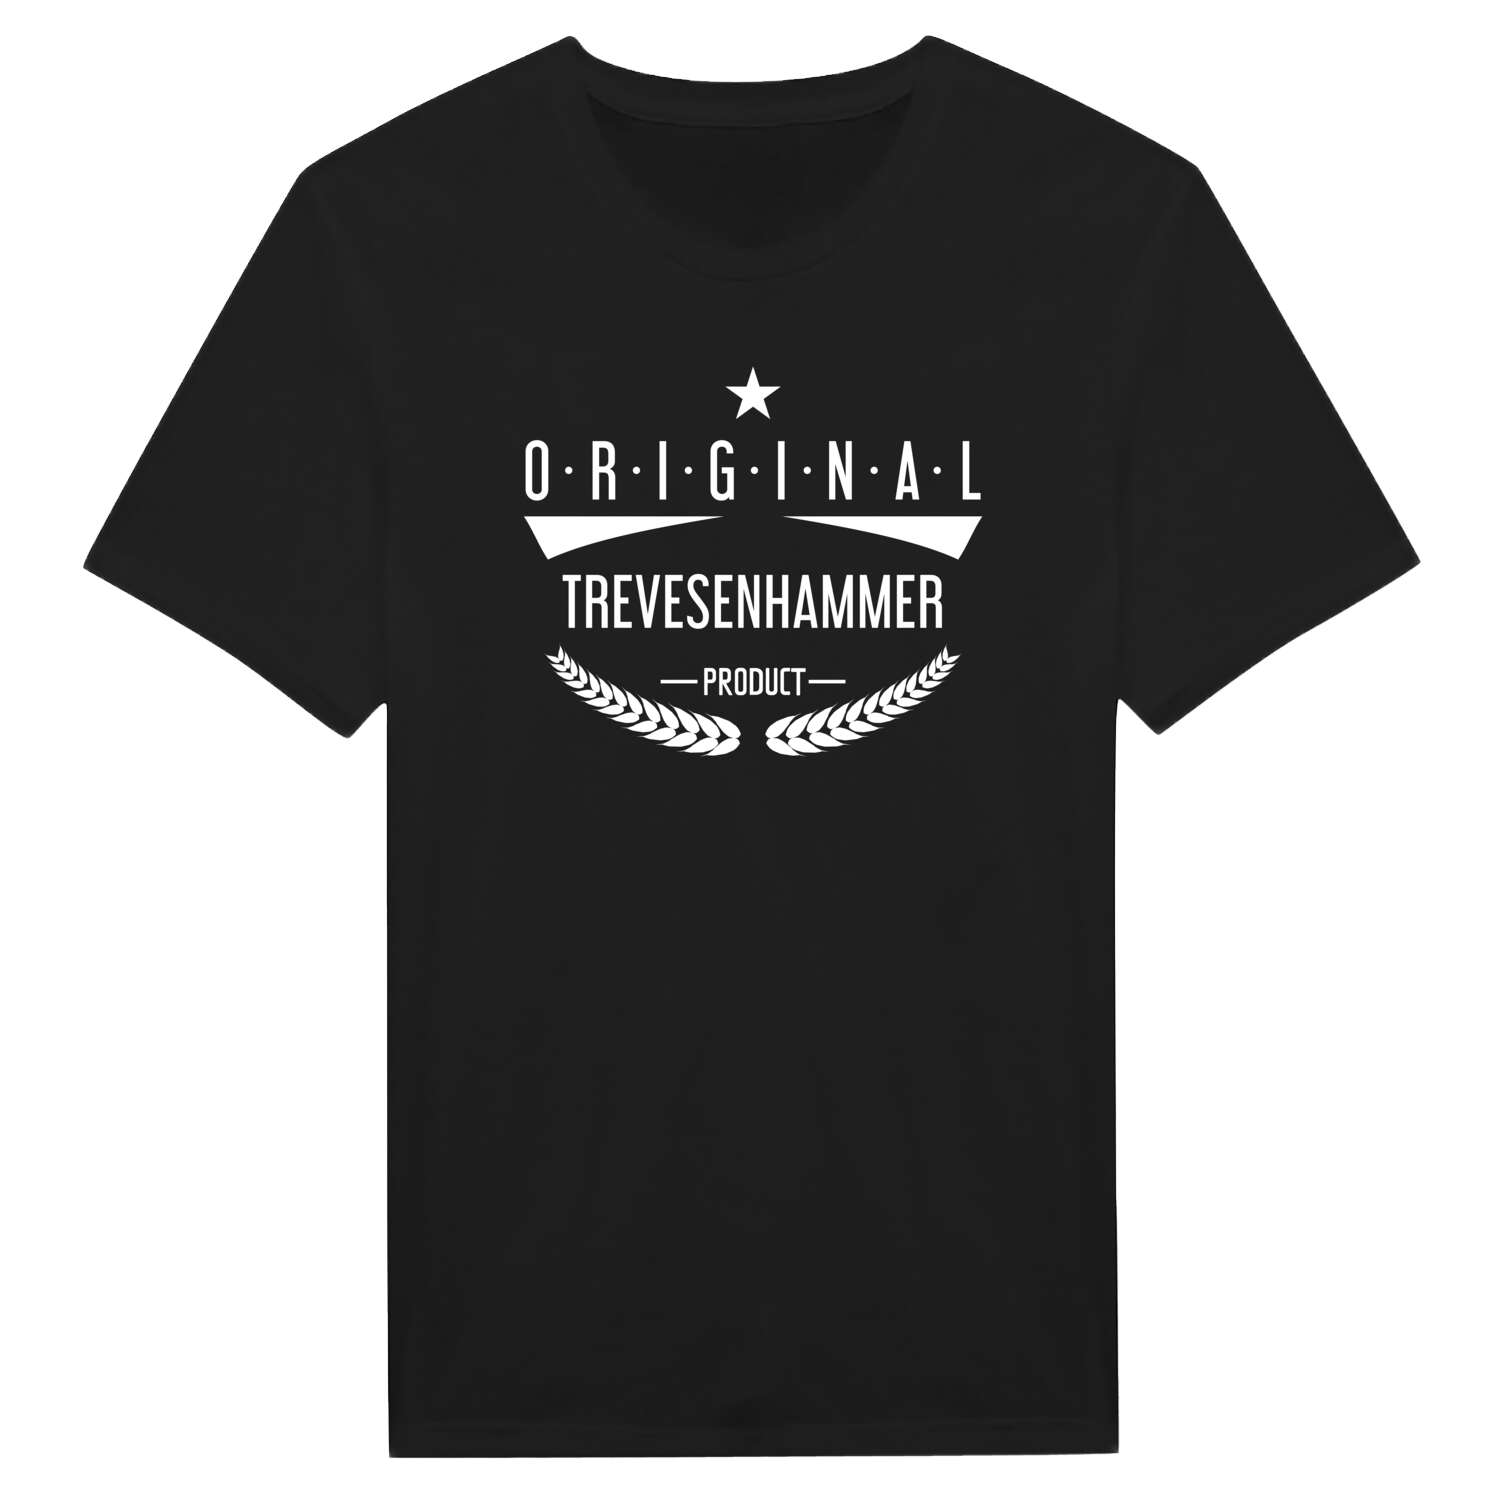 Trevesenhammer T-Shirt »Original Product«